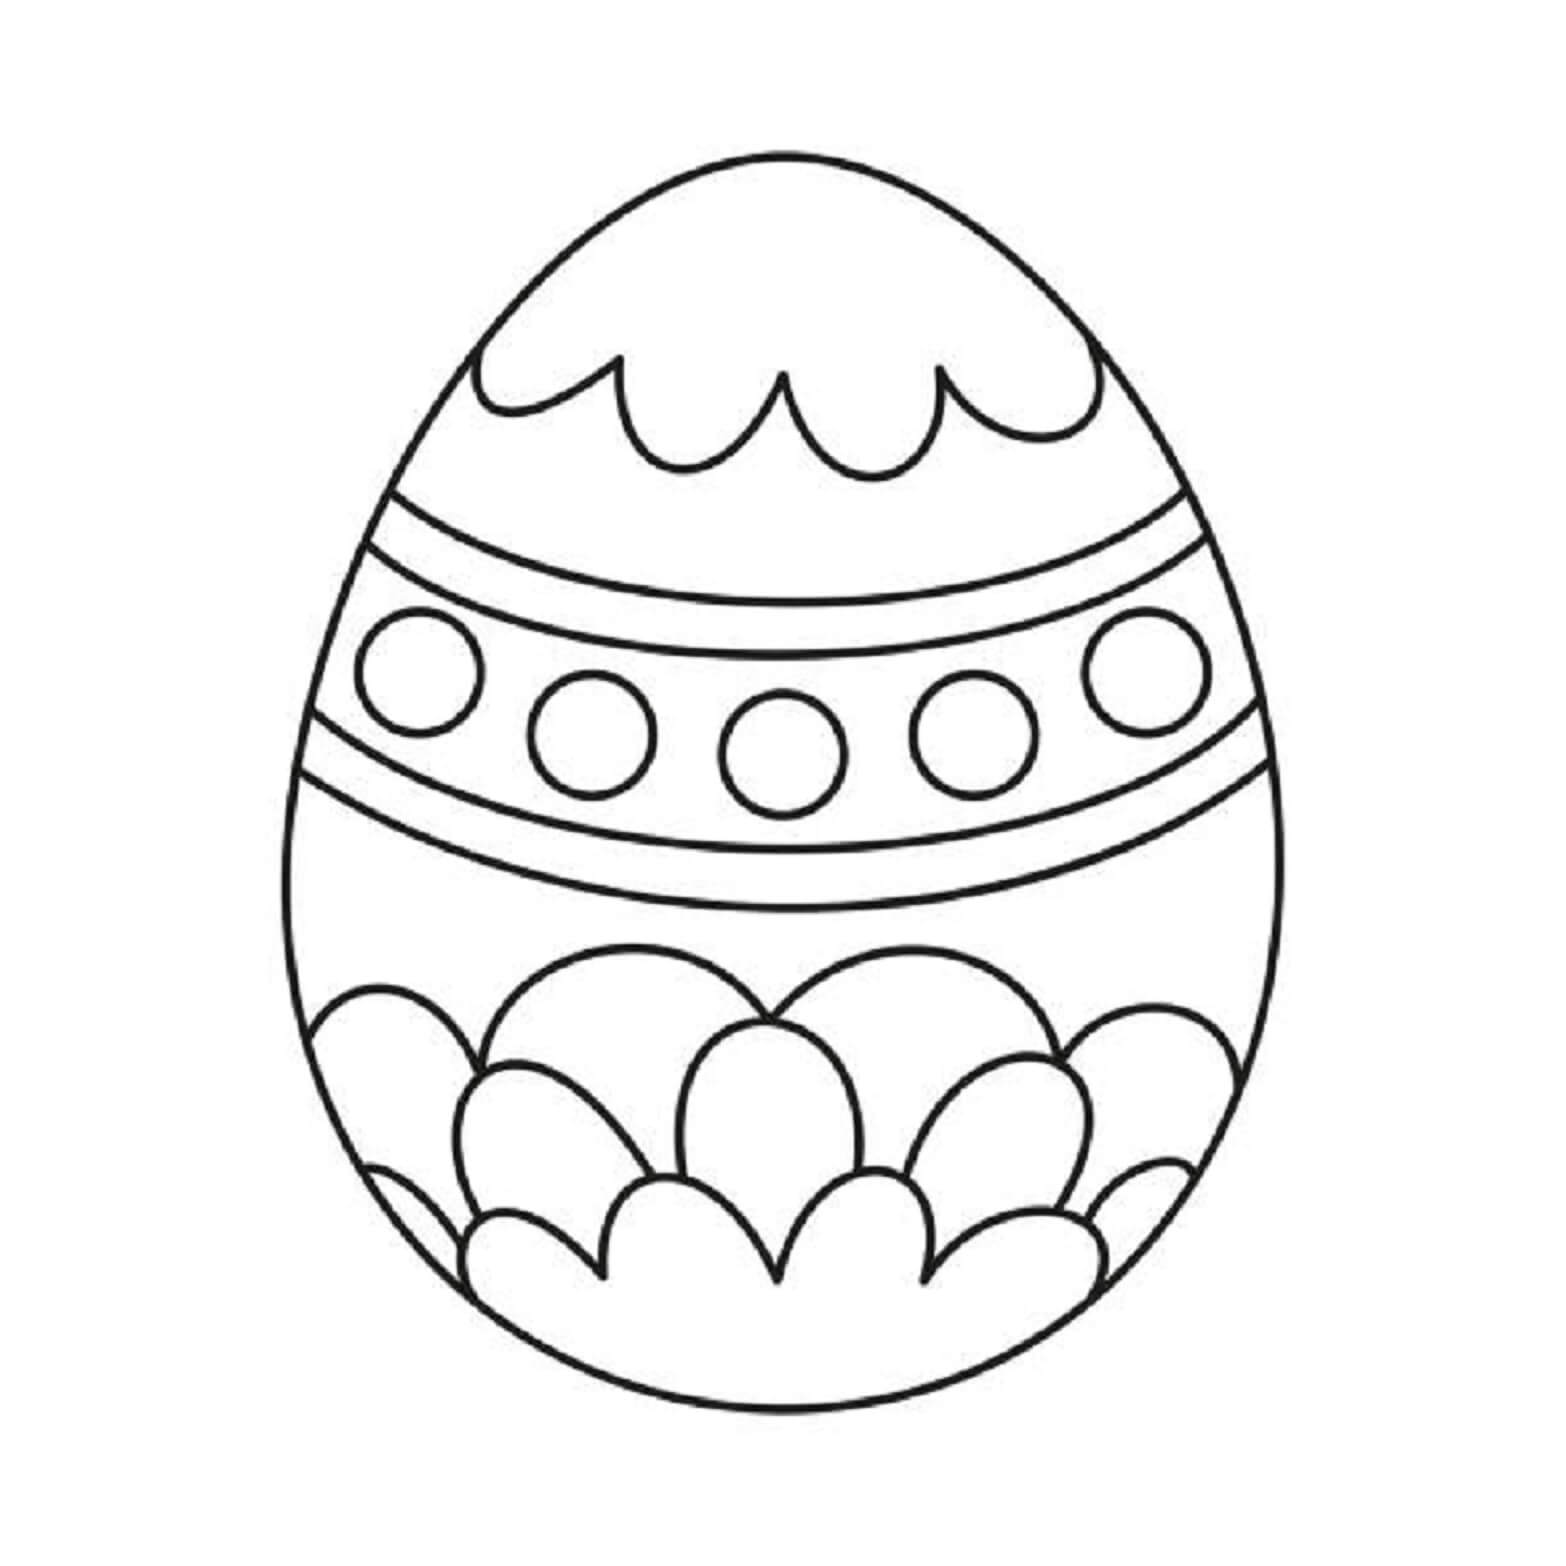 Desenhos de Ovos de Pascoa para colorir